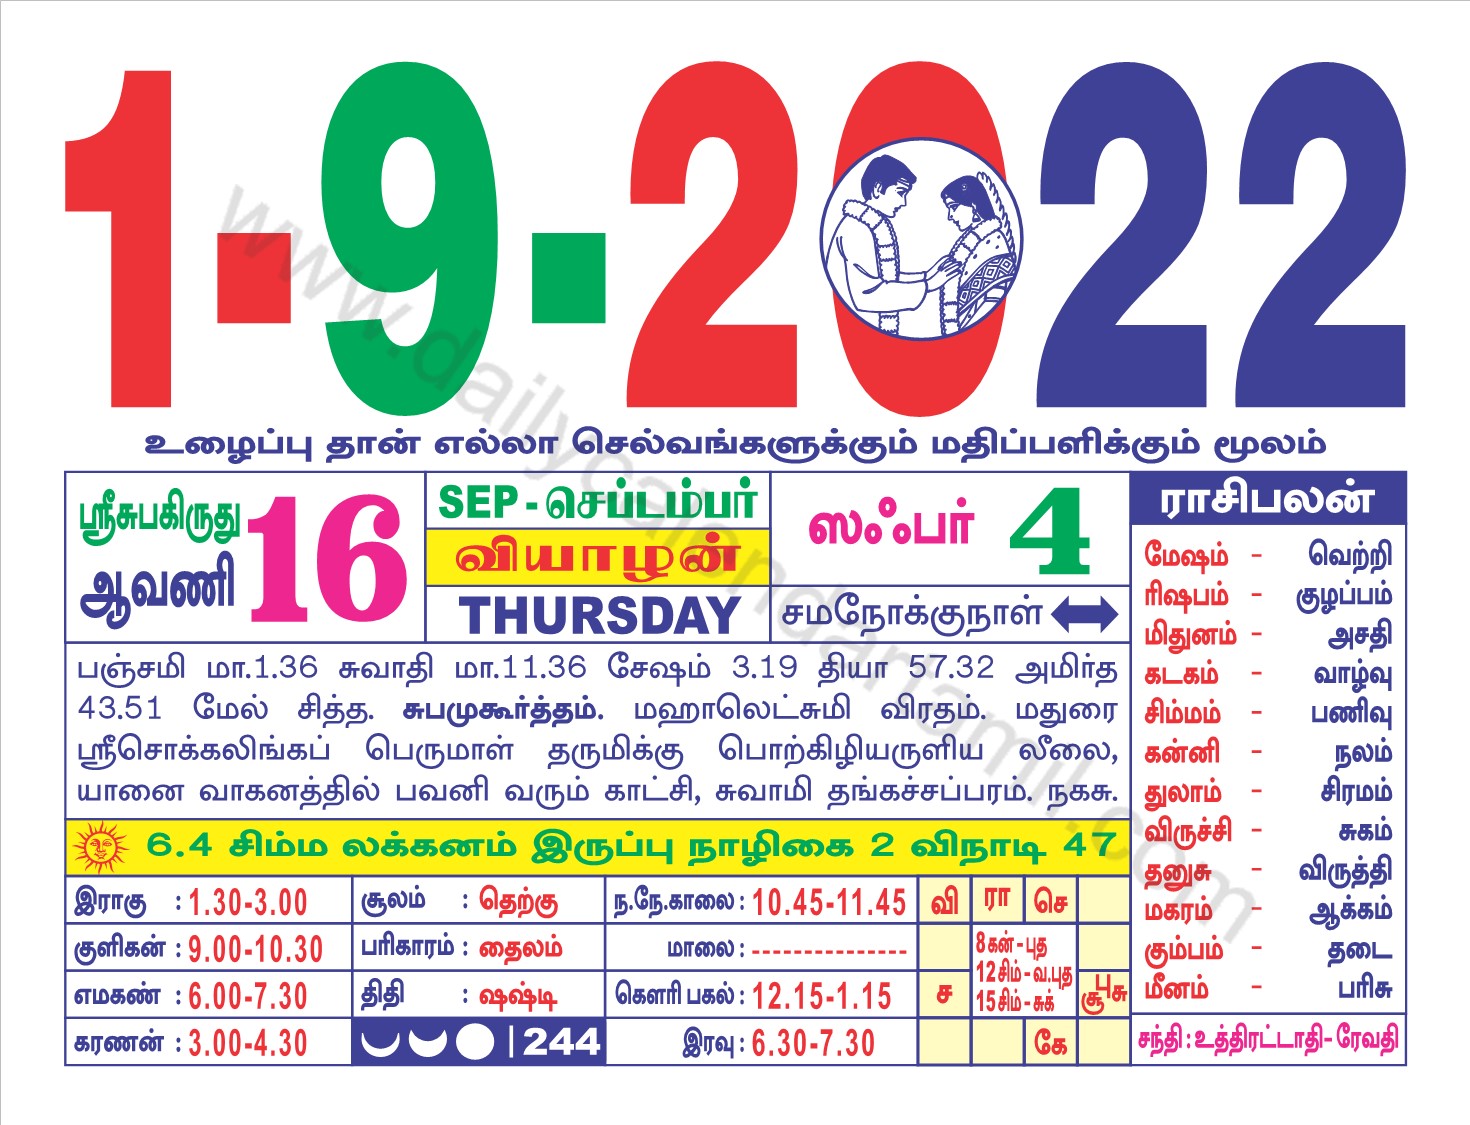 Tamildaily Calendar 2022 Tamil Calendar September 2022 | தமிழ் மாத காலண்டர் 2022